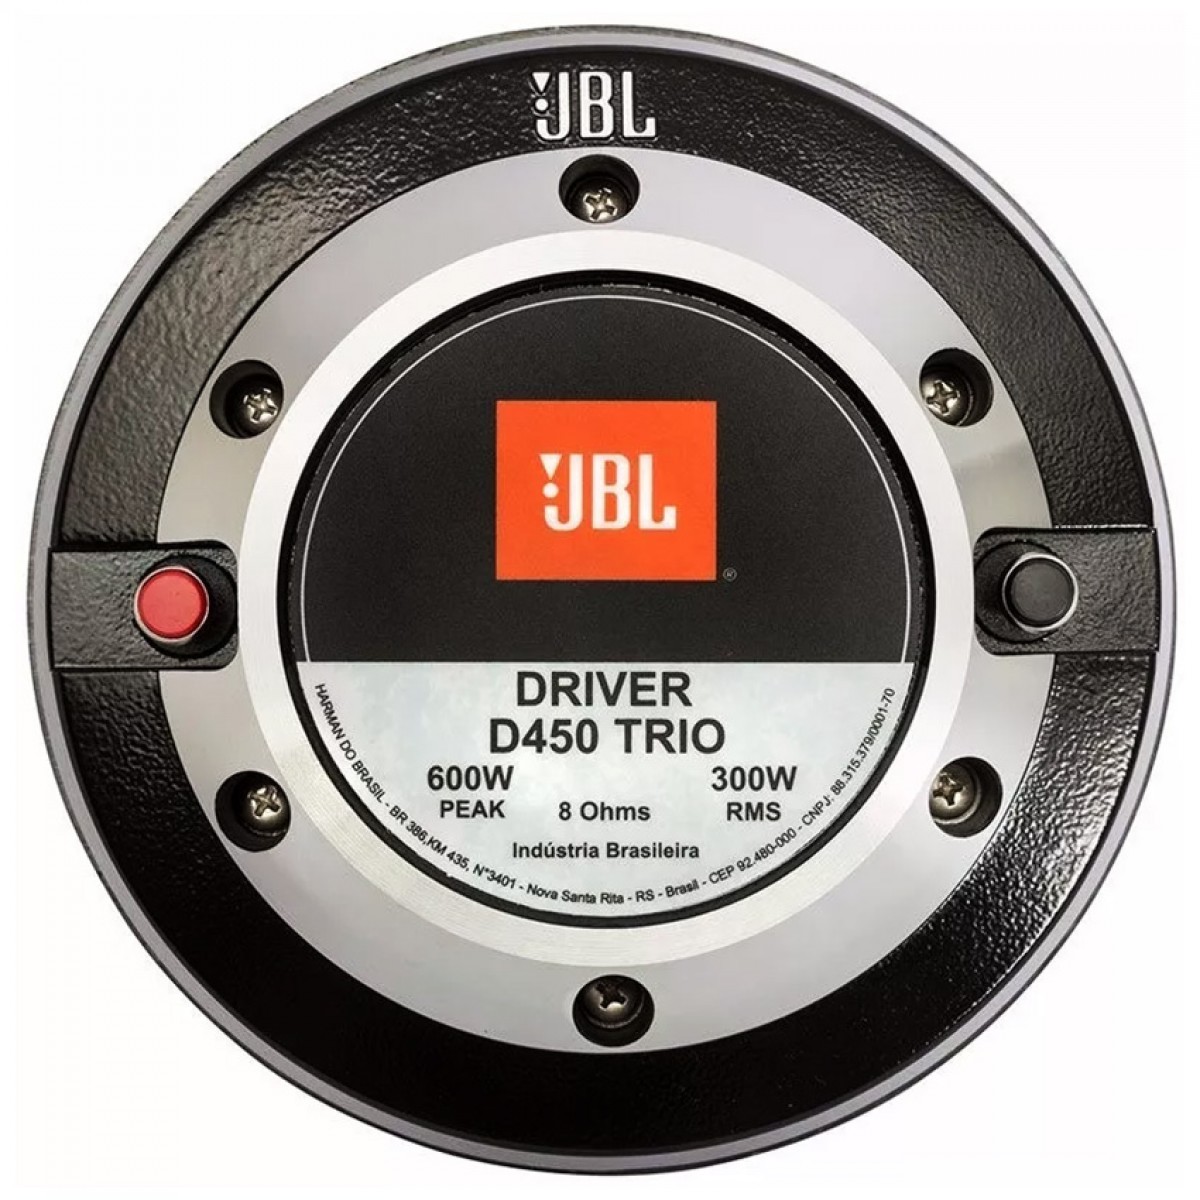 DRIVER JBL D450 TI TRIO